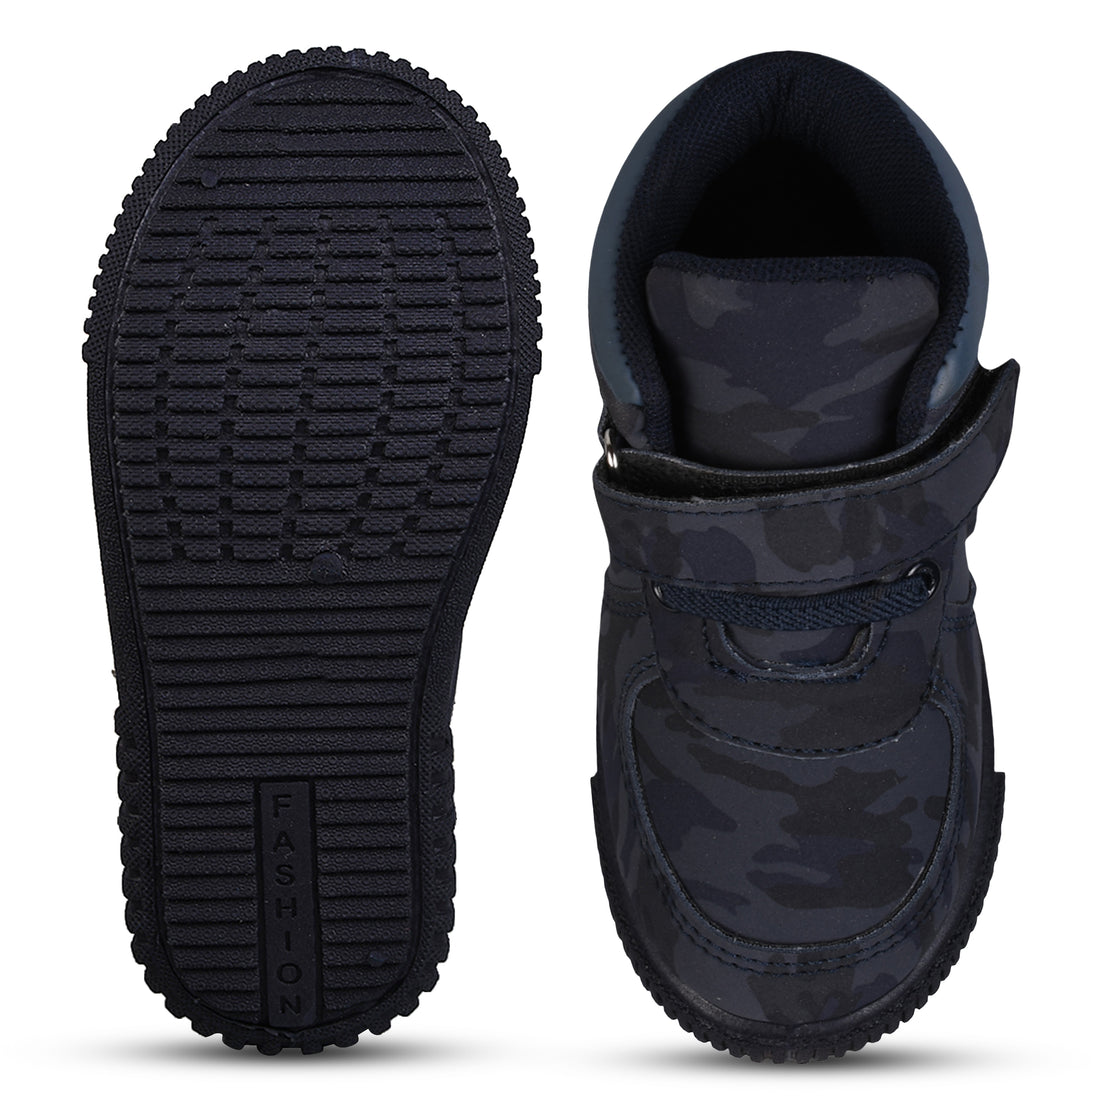 Kats FOREST HI-NECK Unisex-Child Babyfit Strap Closure Kids Casual Shoes (2 to 5 Years)